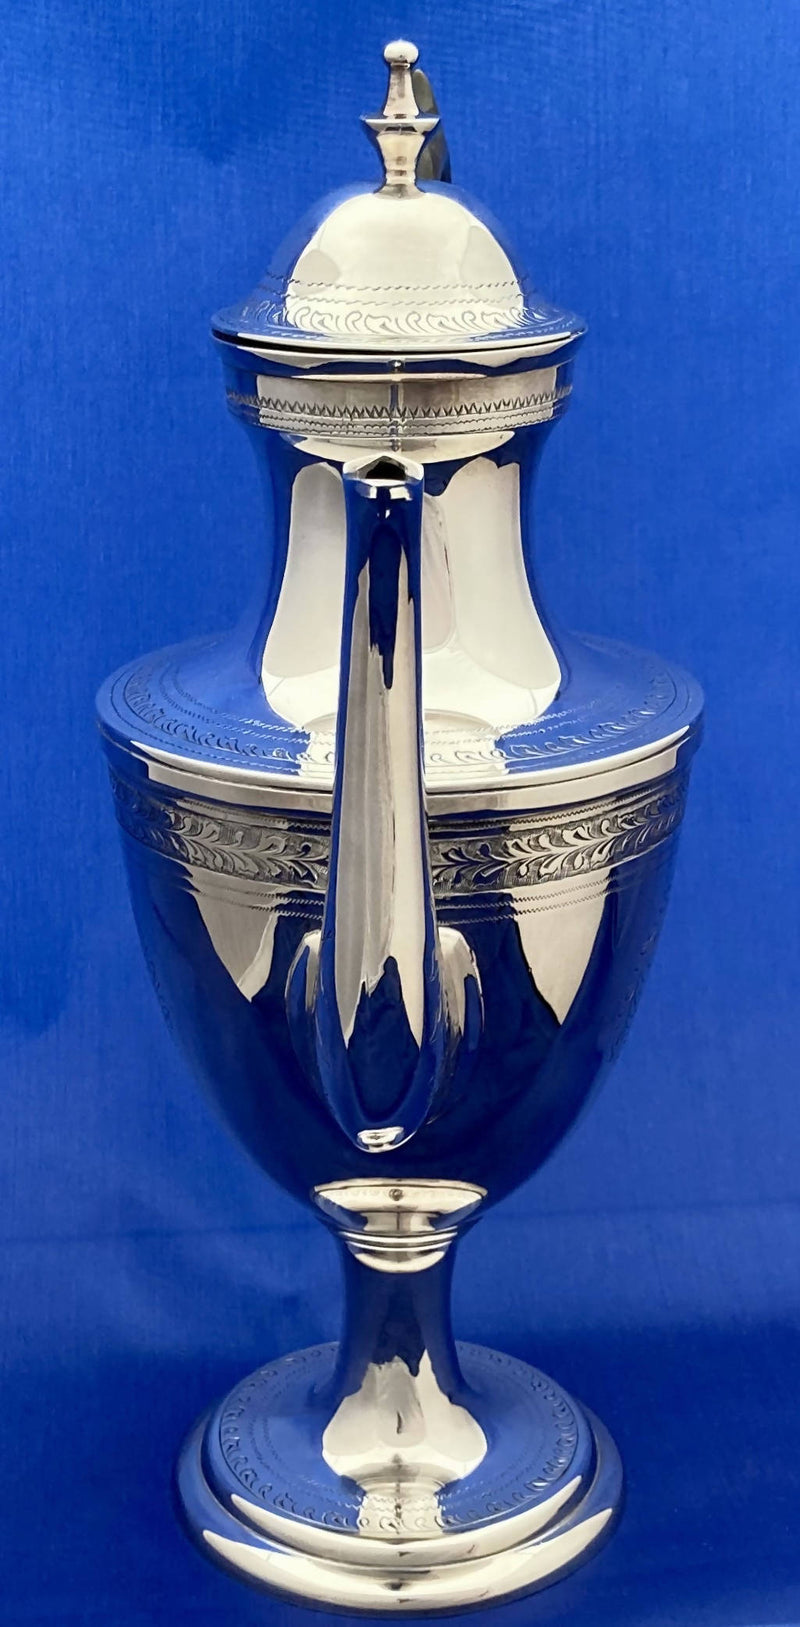 George III Style Silver Plated Pedestal Coffee Pot, circa 1890 - 1910.